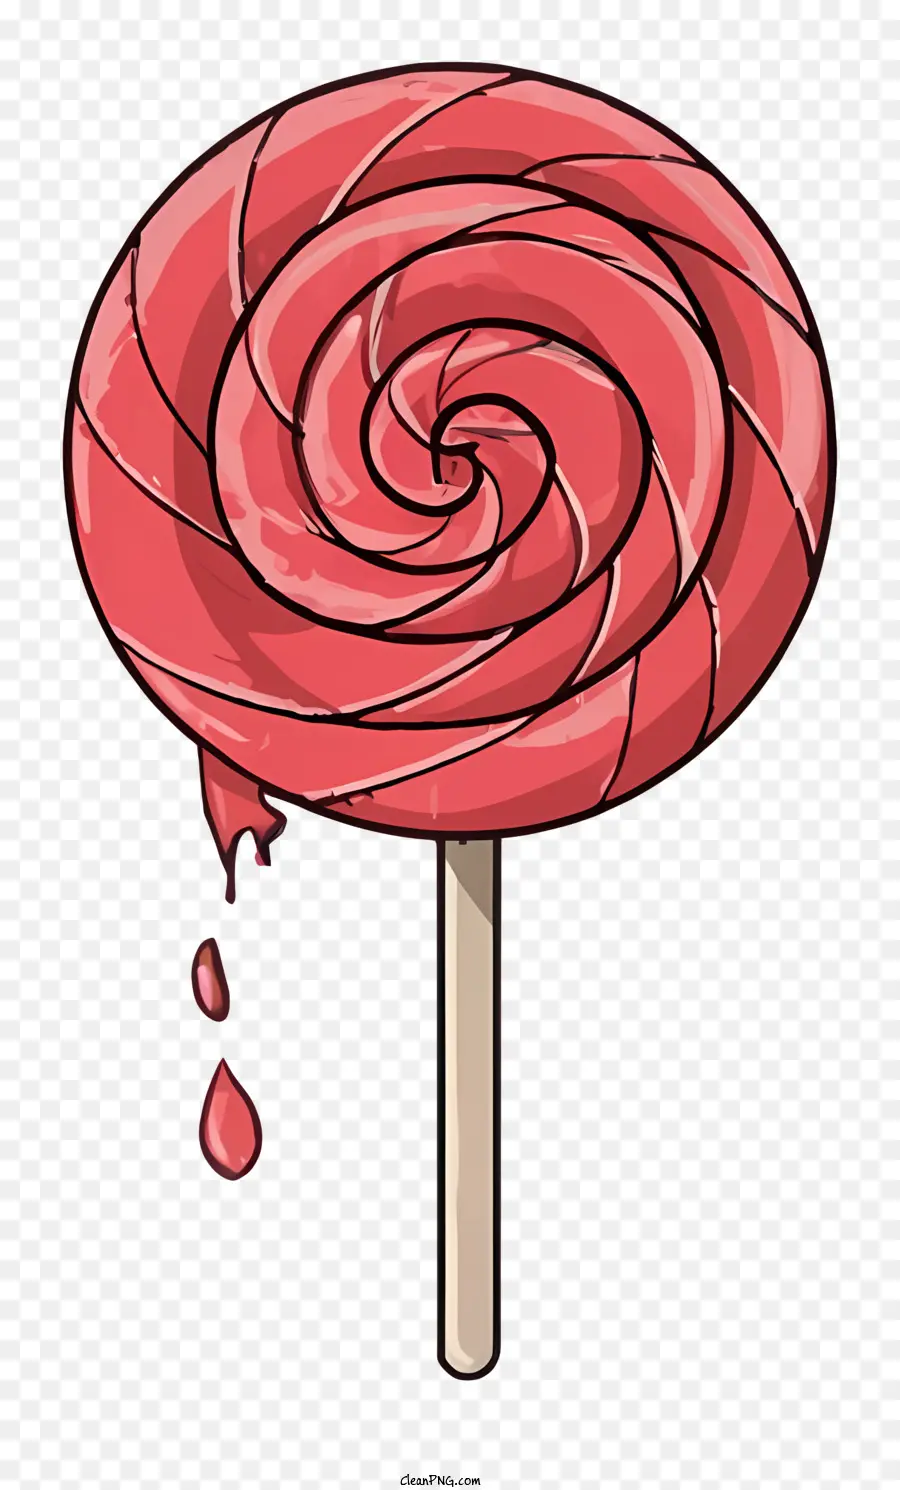 Cartoon Lollipop Candy Red Swirl Design - Lollipop di caramelle colorate sul bastone tenuto a mano